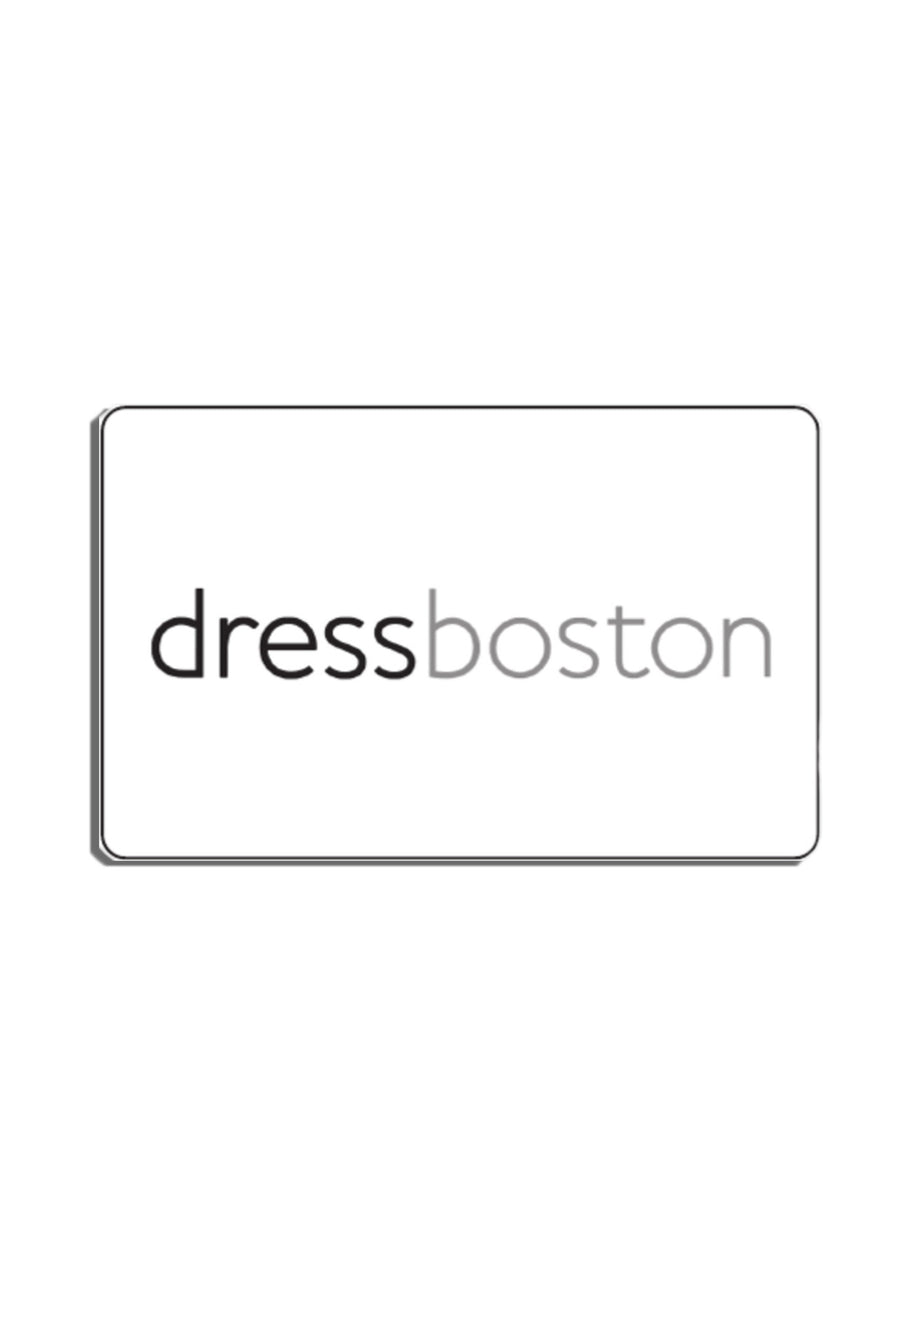 Dress Boston Gift Card